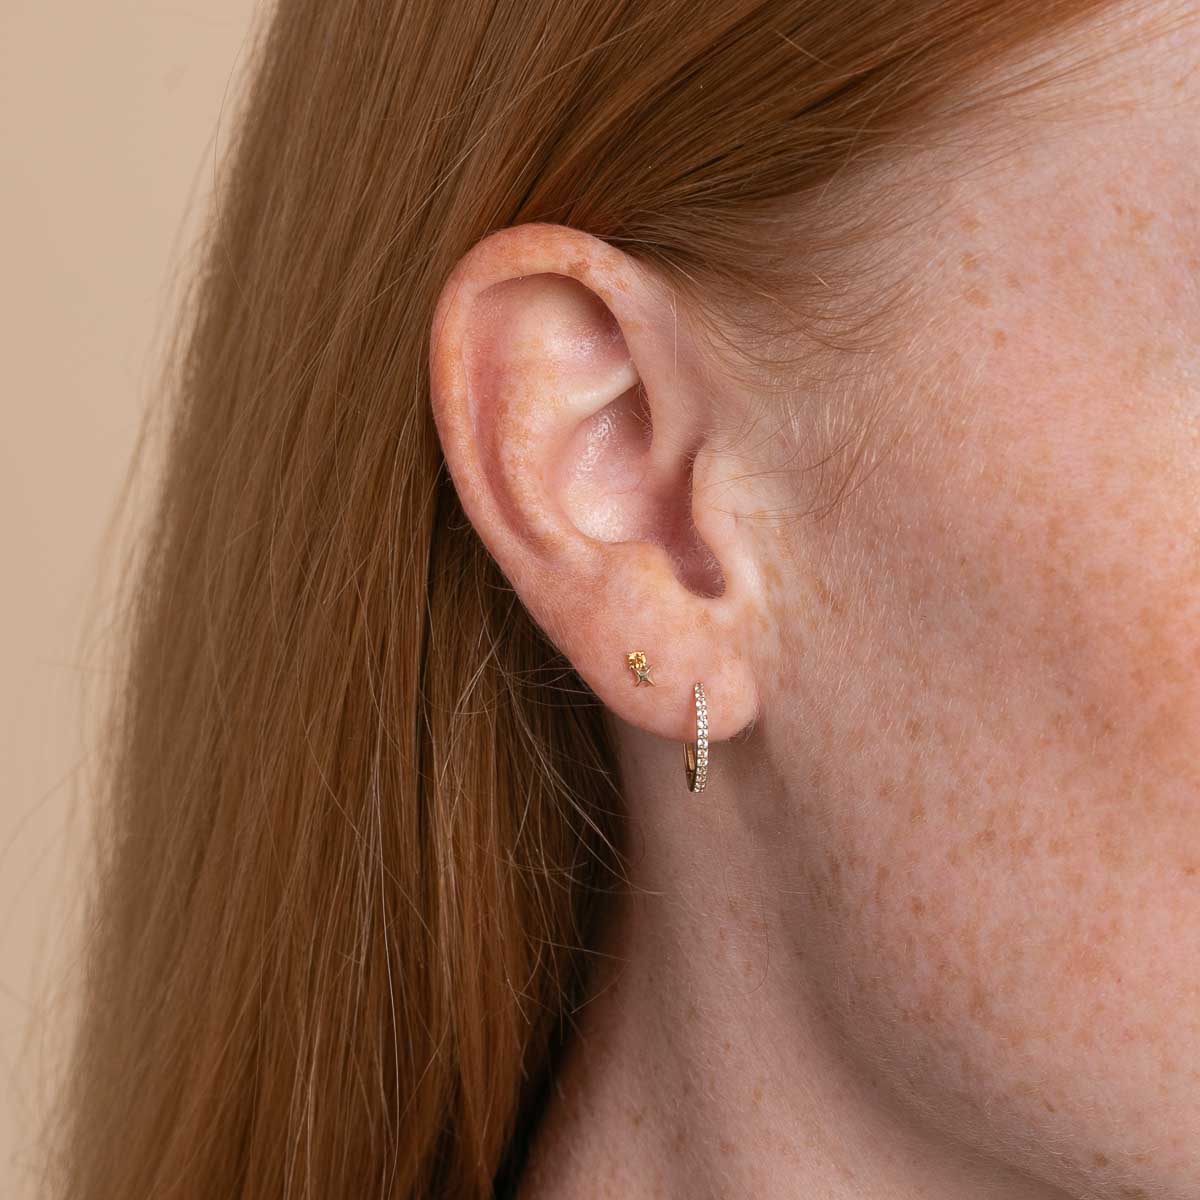 10K Solid Gold Cartilage Earring In a Snake Design  Zahav Jewelry Shop